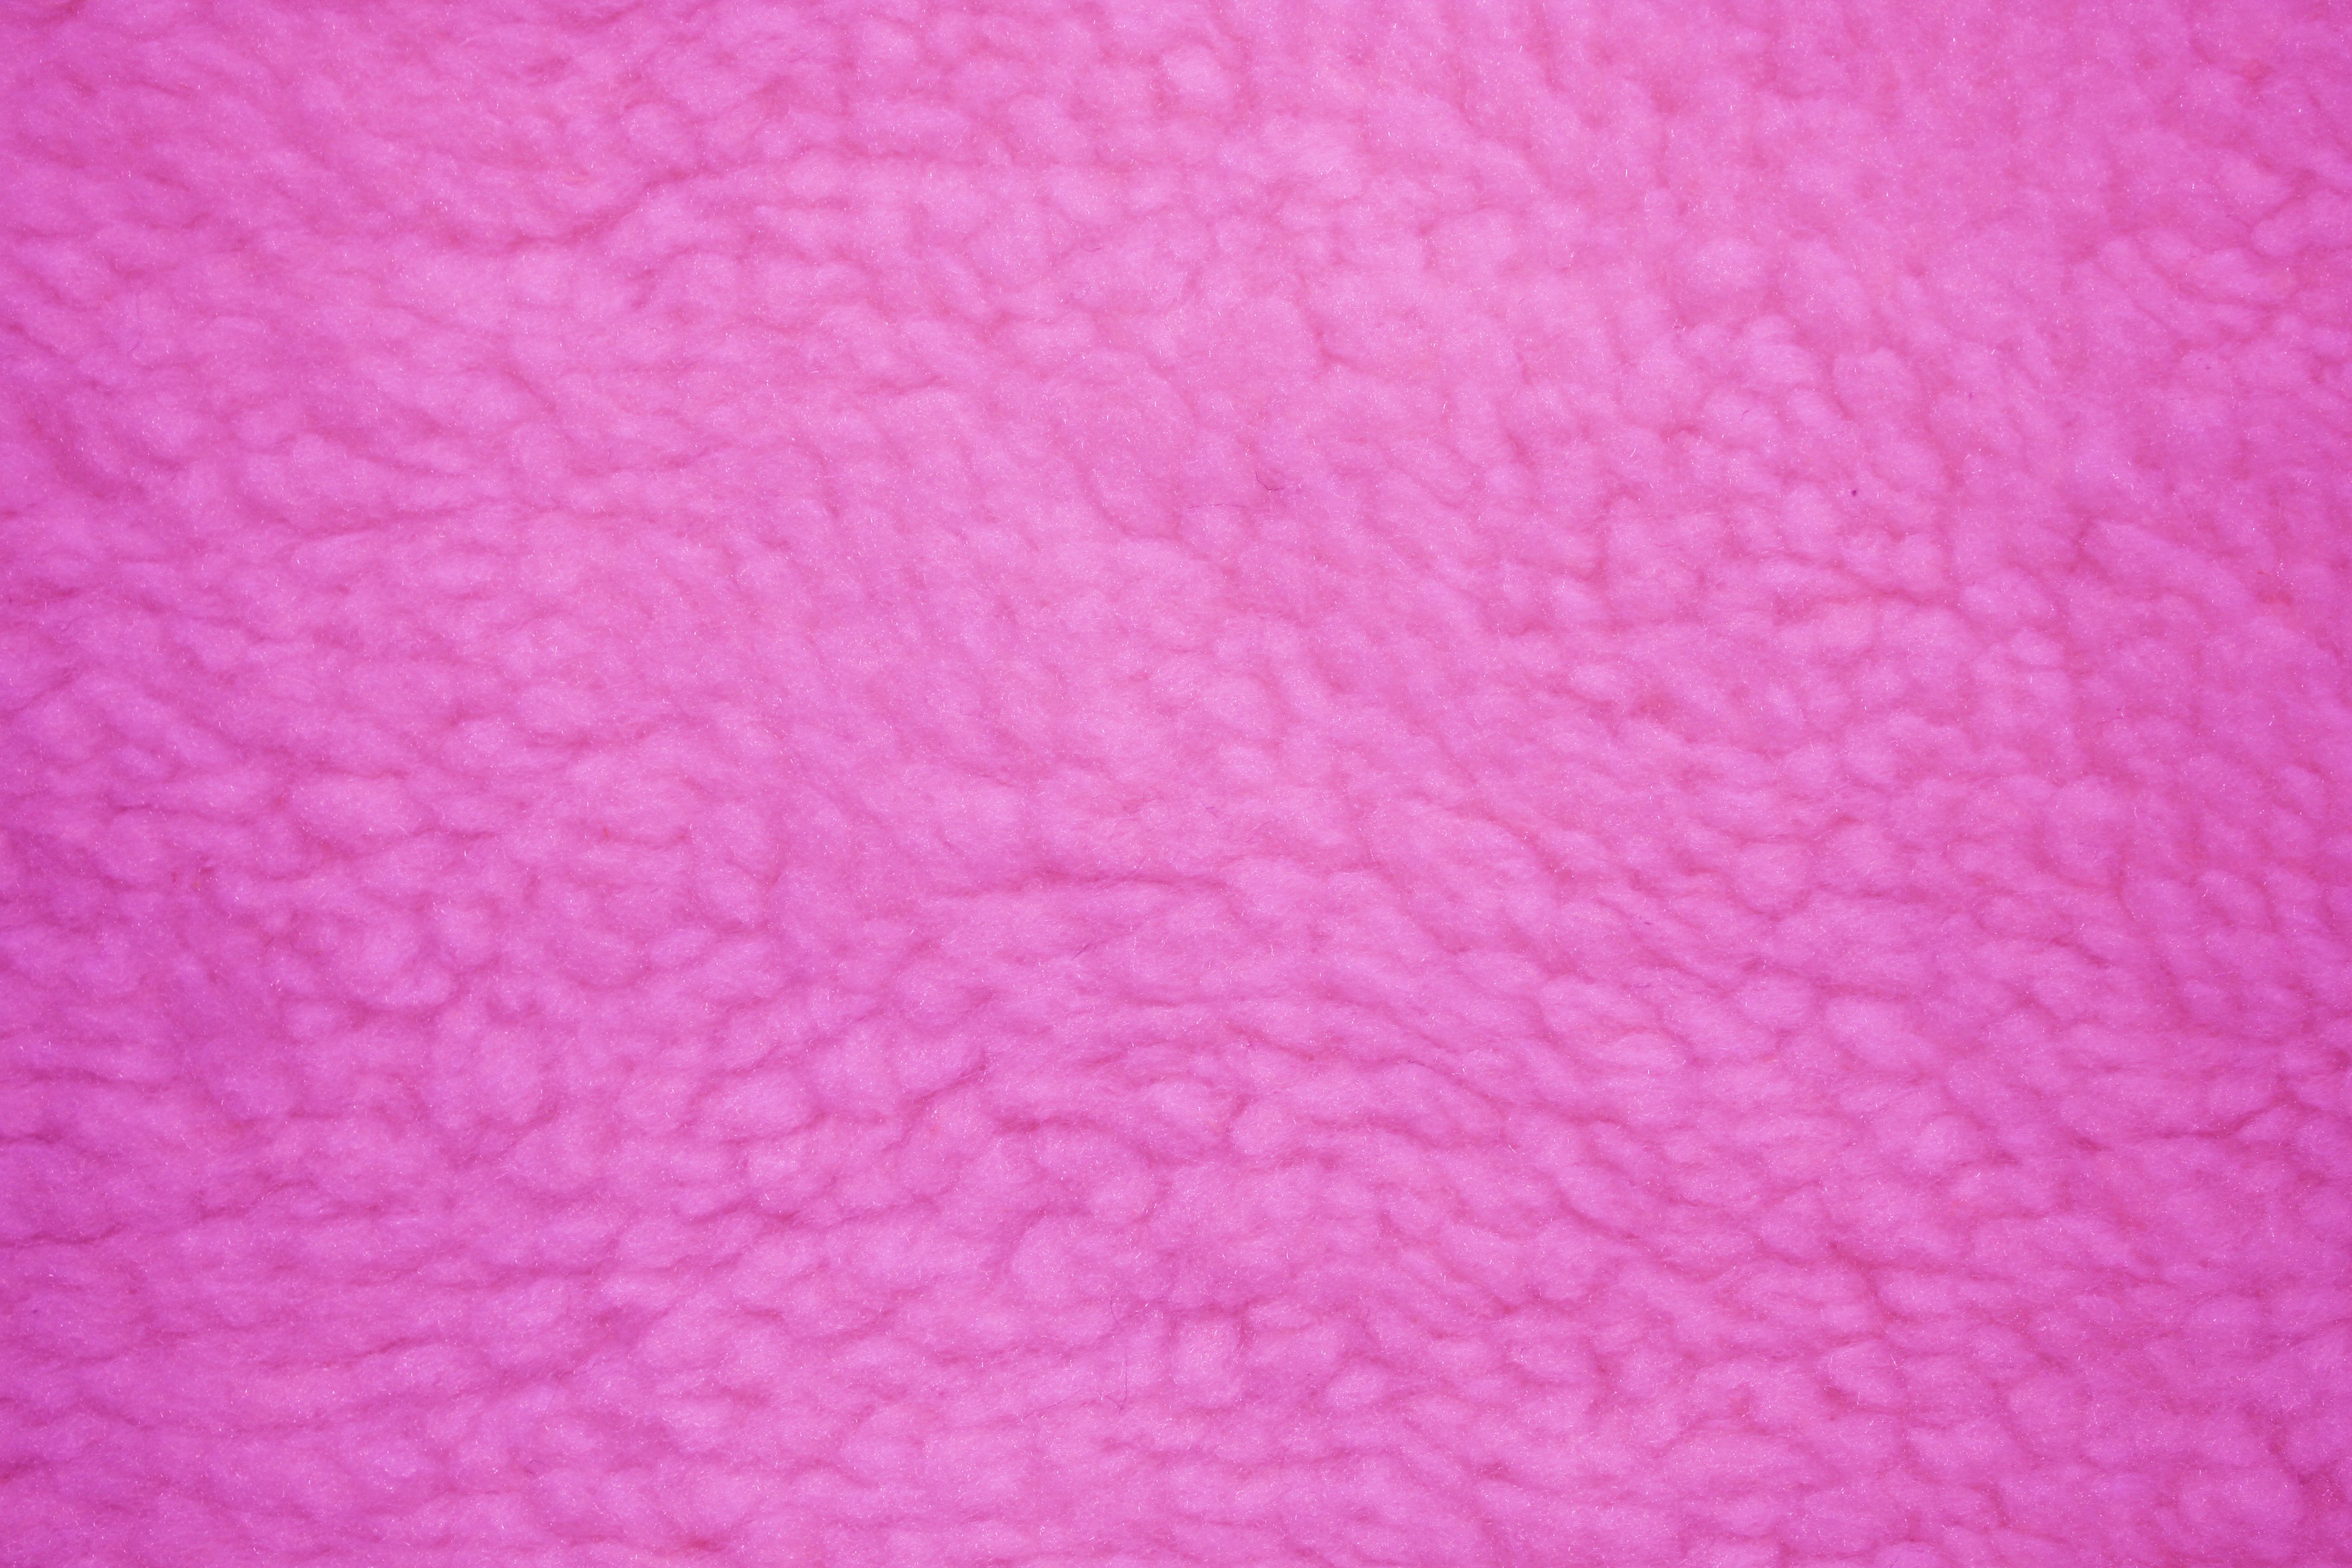 Fuchsia Hot Pink Fleece Faux Sherpa Wool Fabric Texture Picture | Free